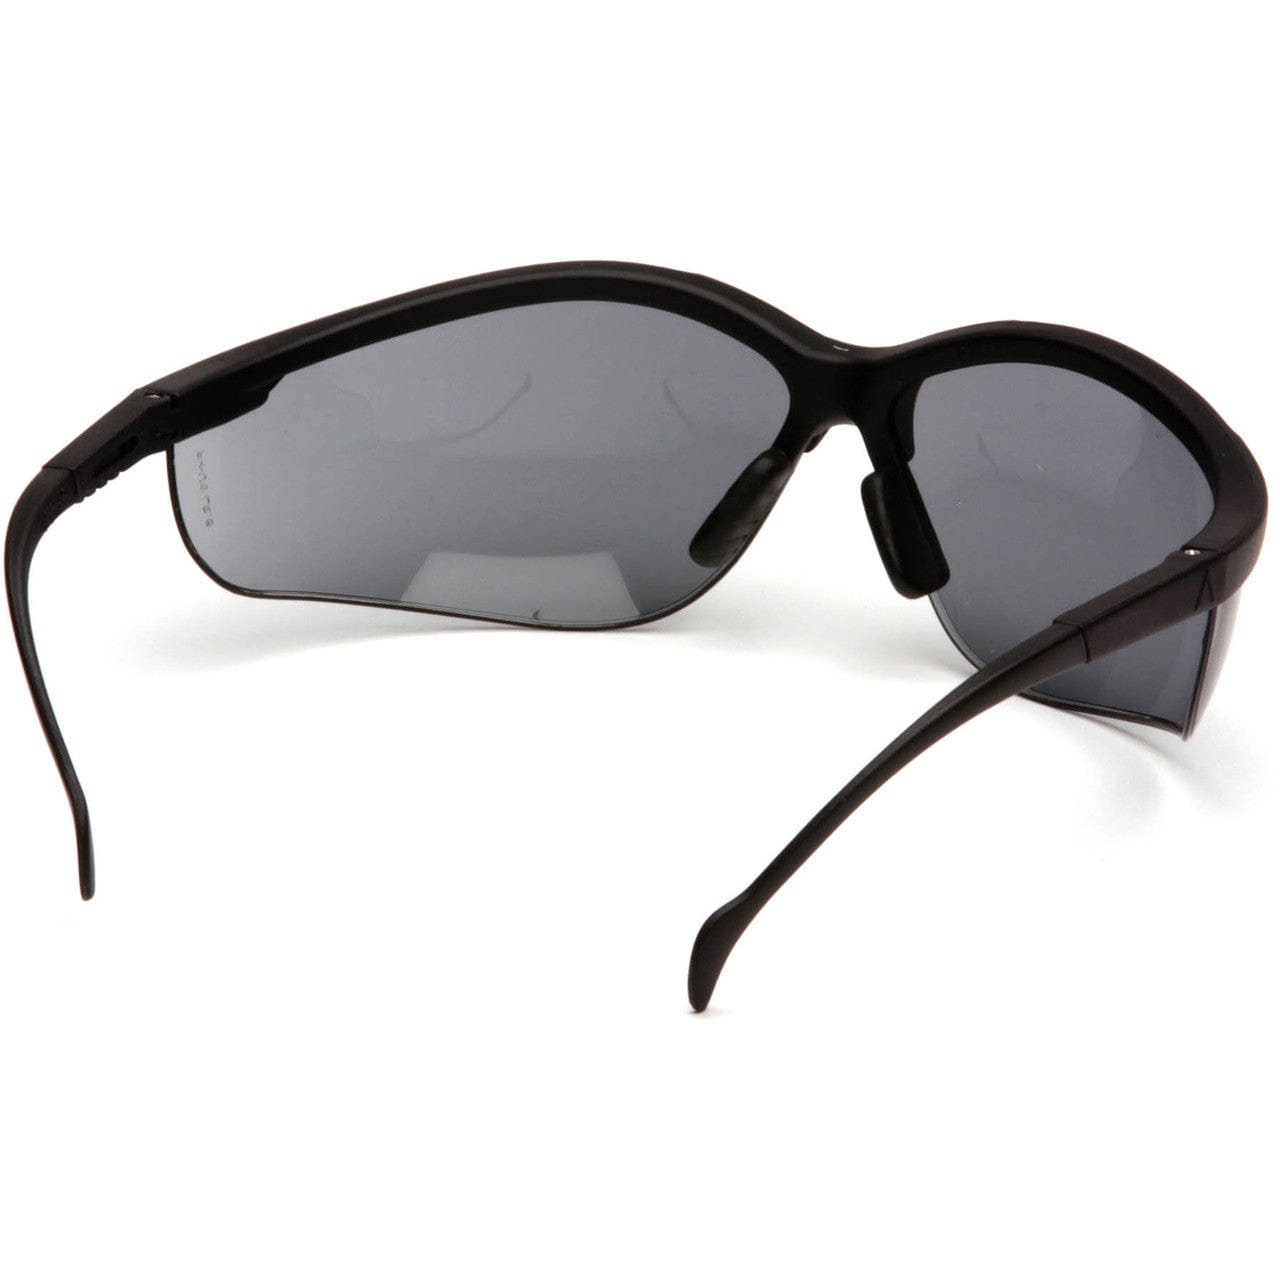 Pyramex Venture 2 Safety Glasses Black Frame Gray Lens SB1820S Inside View